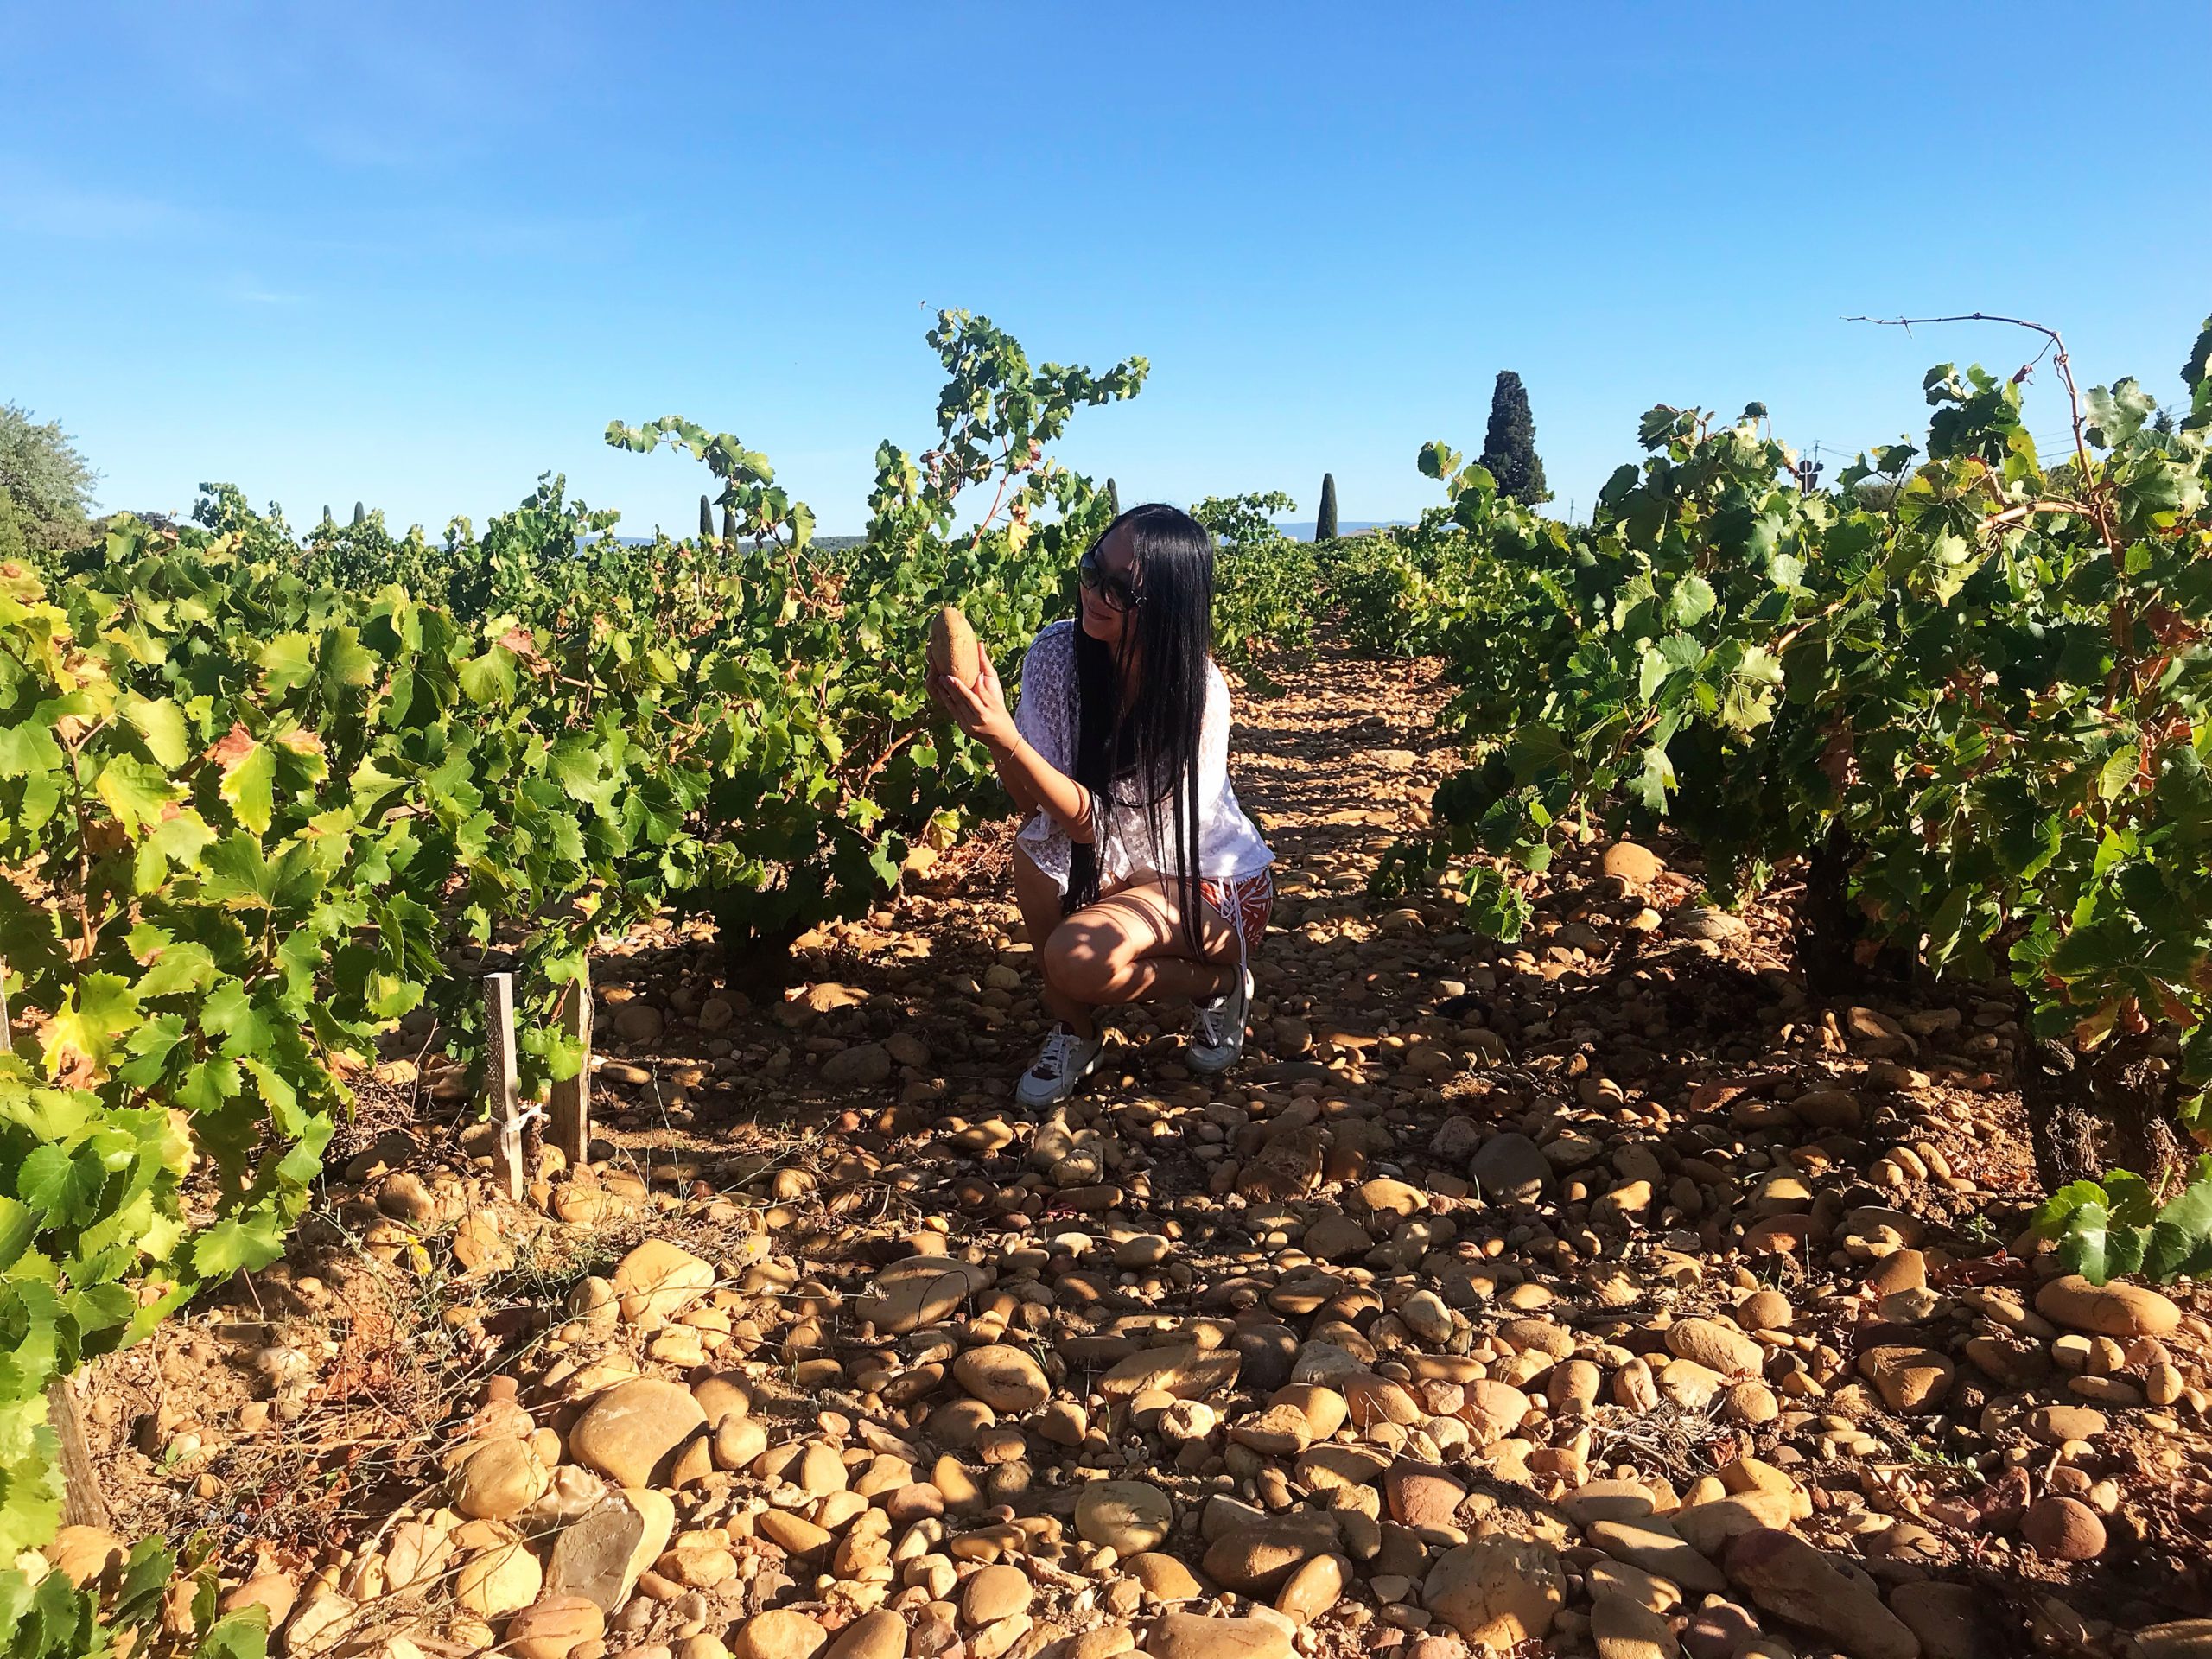 Cynthia Yang visiting wineries in Rhone Valley in France